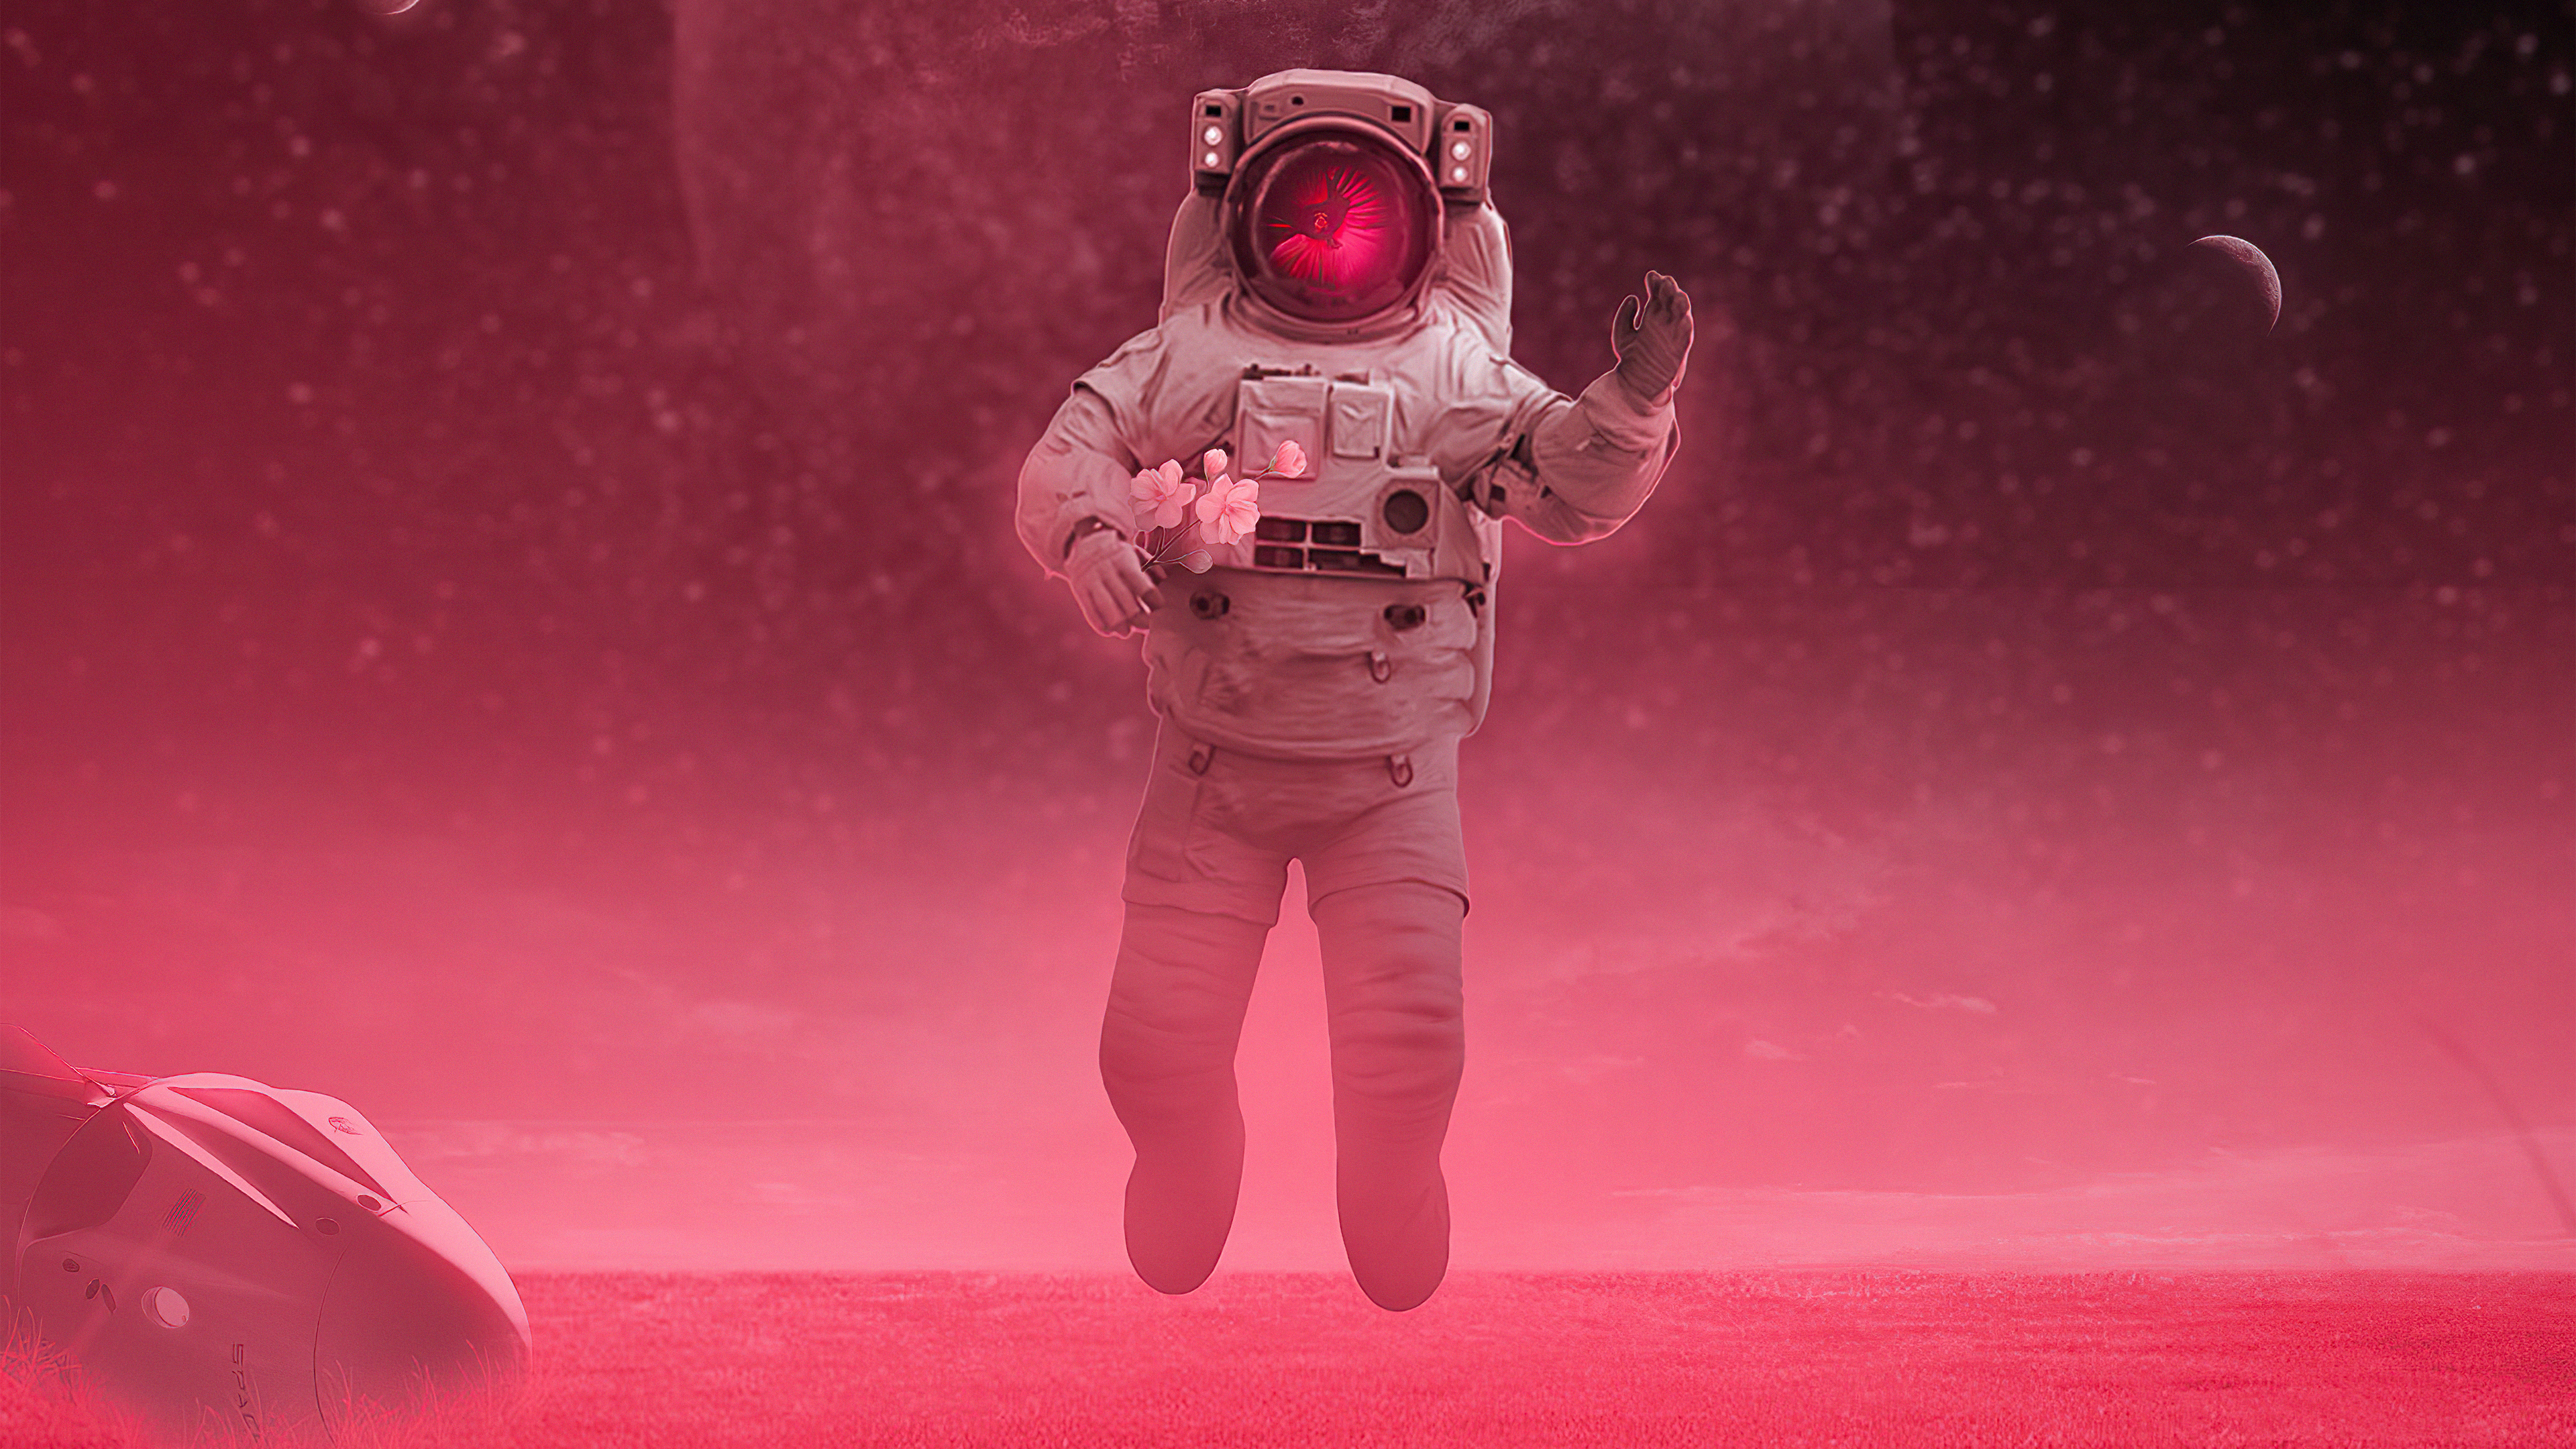 pink astronaut